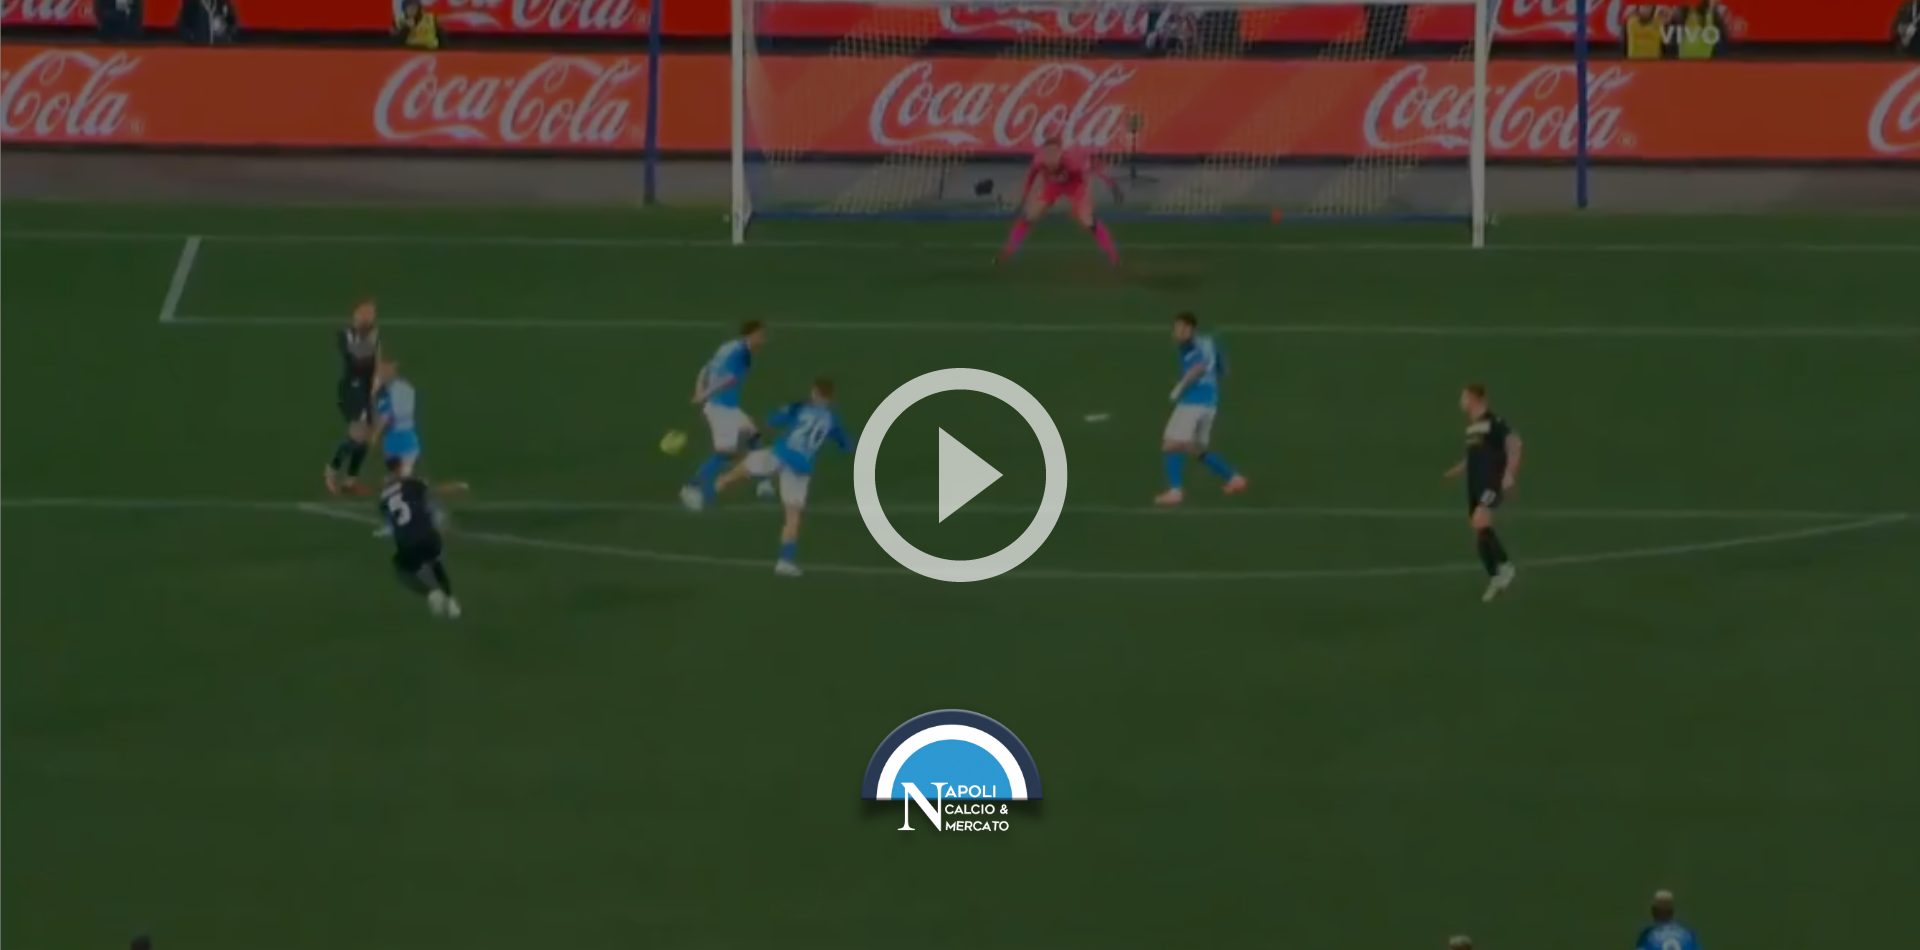 Napoli Calcio & Mercato on X: "🔵🔥 Highlights Napoli Lazio 0-1: gol Vecino  e sintesi | VIDEO 🗞️ https://t.co/Q4GYVWZF6O https://t.co/0cJTliba4V" / X